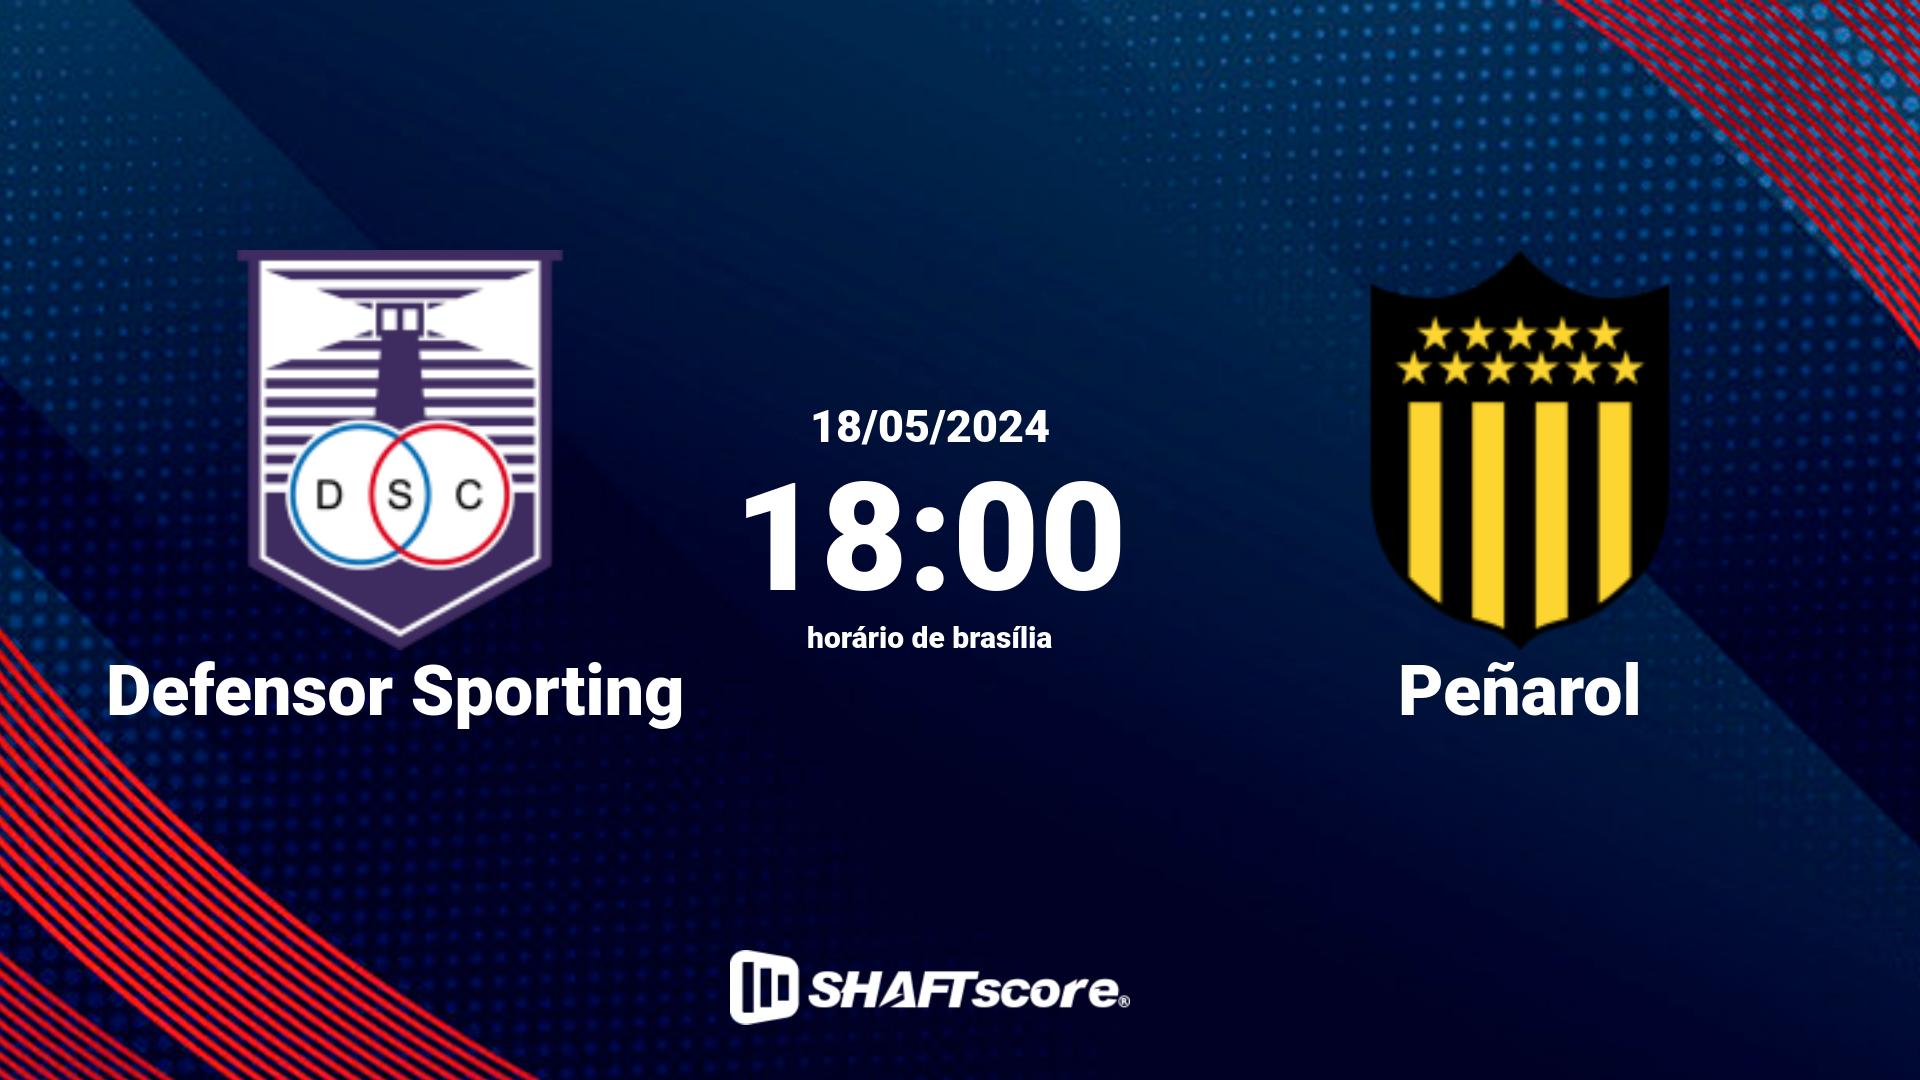 Estatísticas do jogo Defensor Sporting vs Peñarol 18.05 18:00